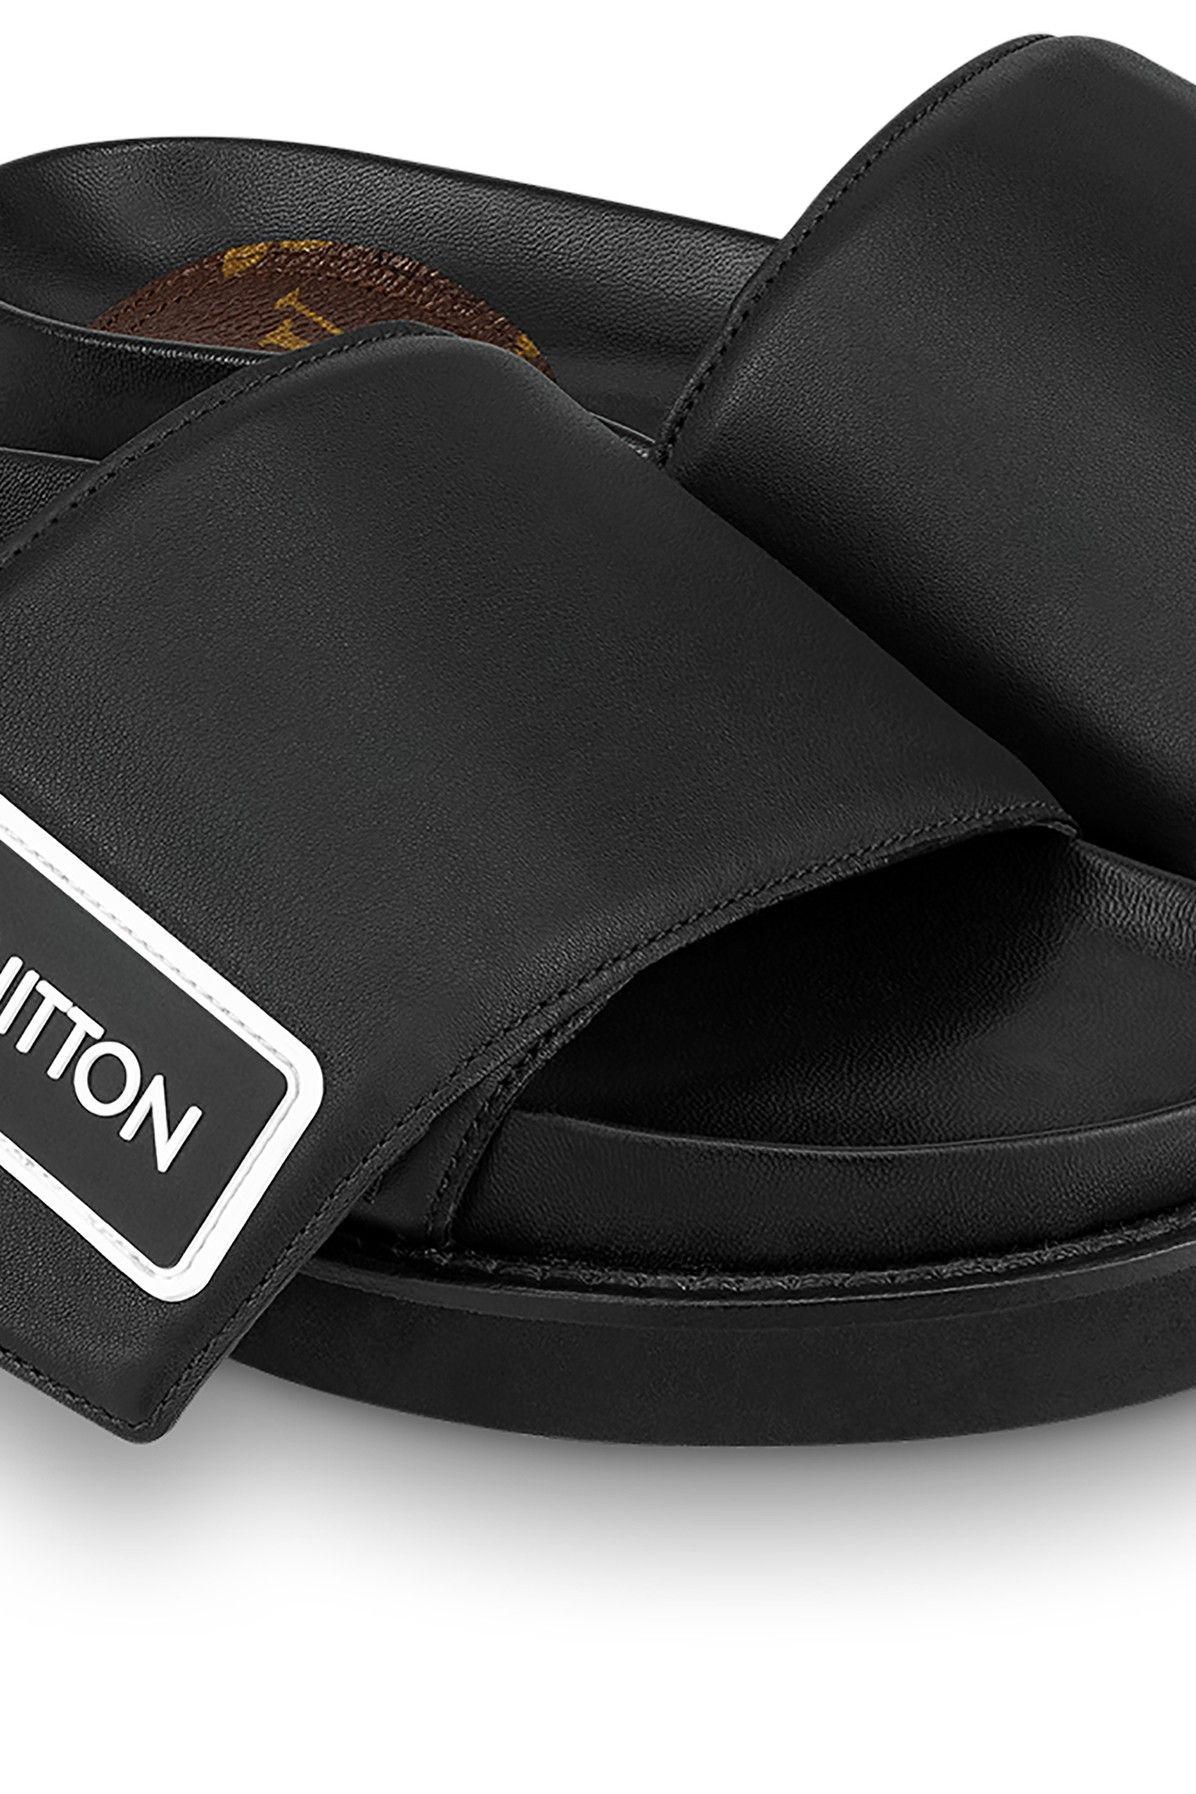 Louis Vuitton LV Sunset Flat Comfort Sandal BLACK. Size 36.0